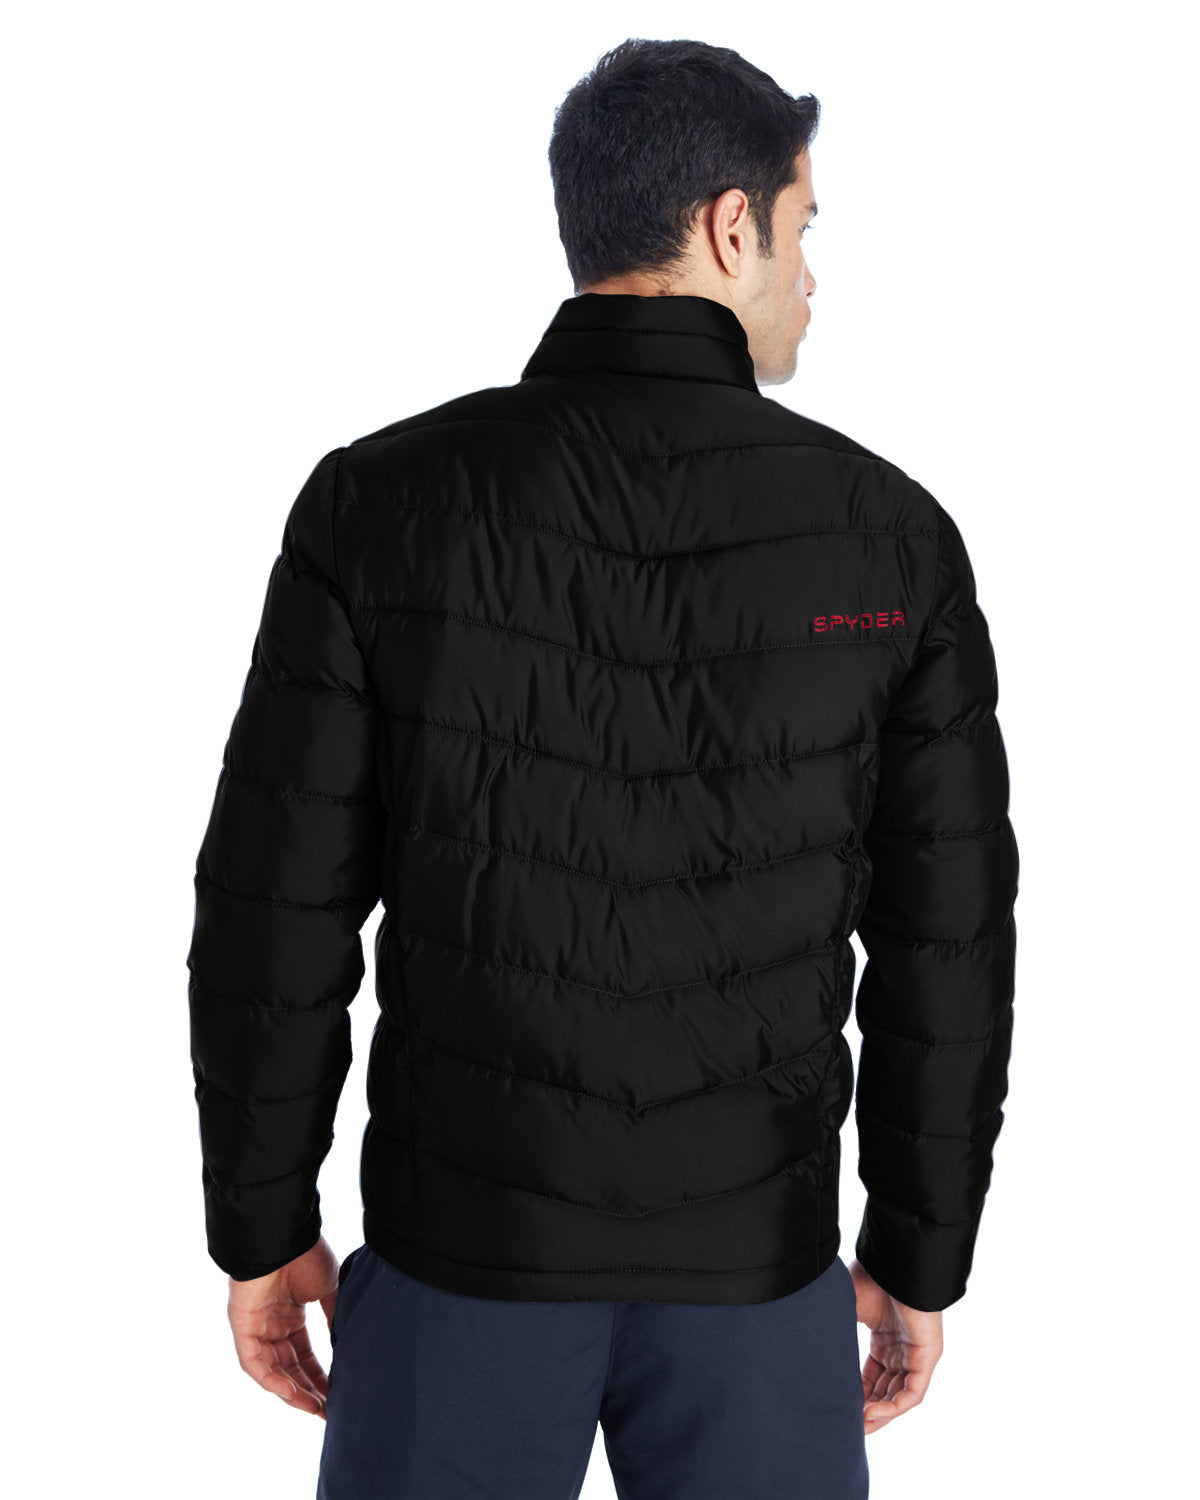 spyder_187333_black/ red_company_logo_jackets